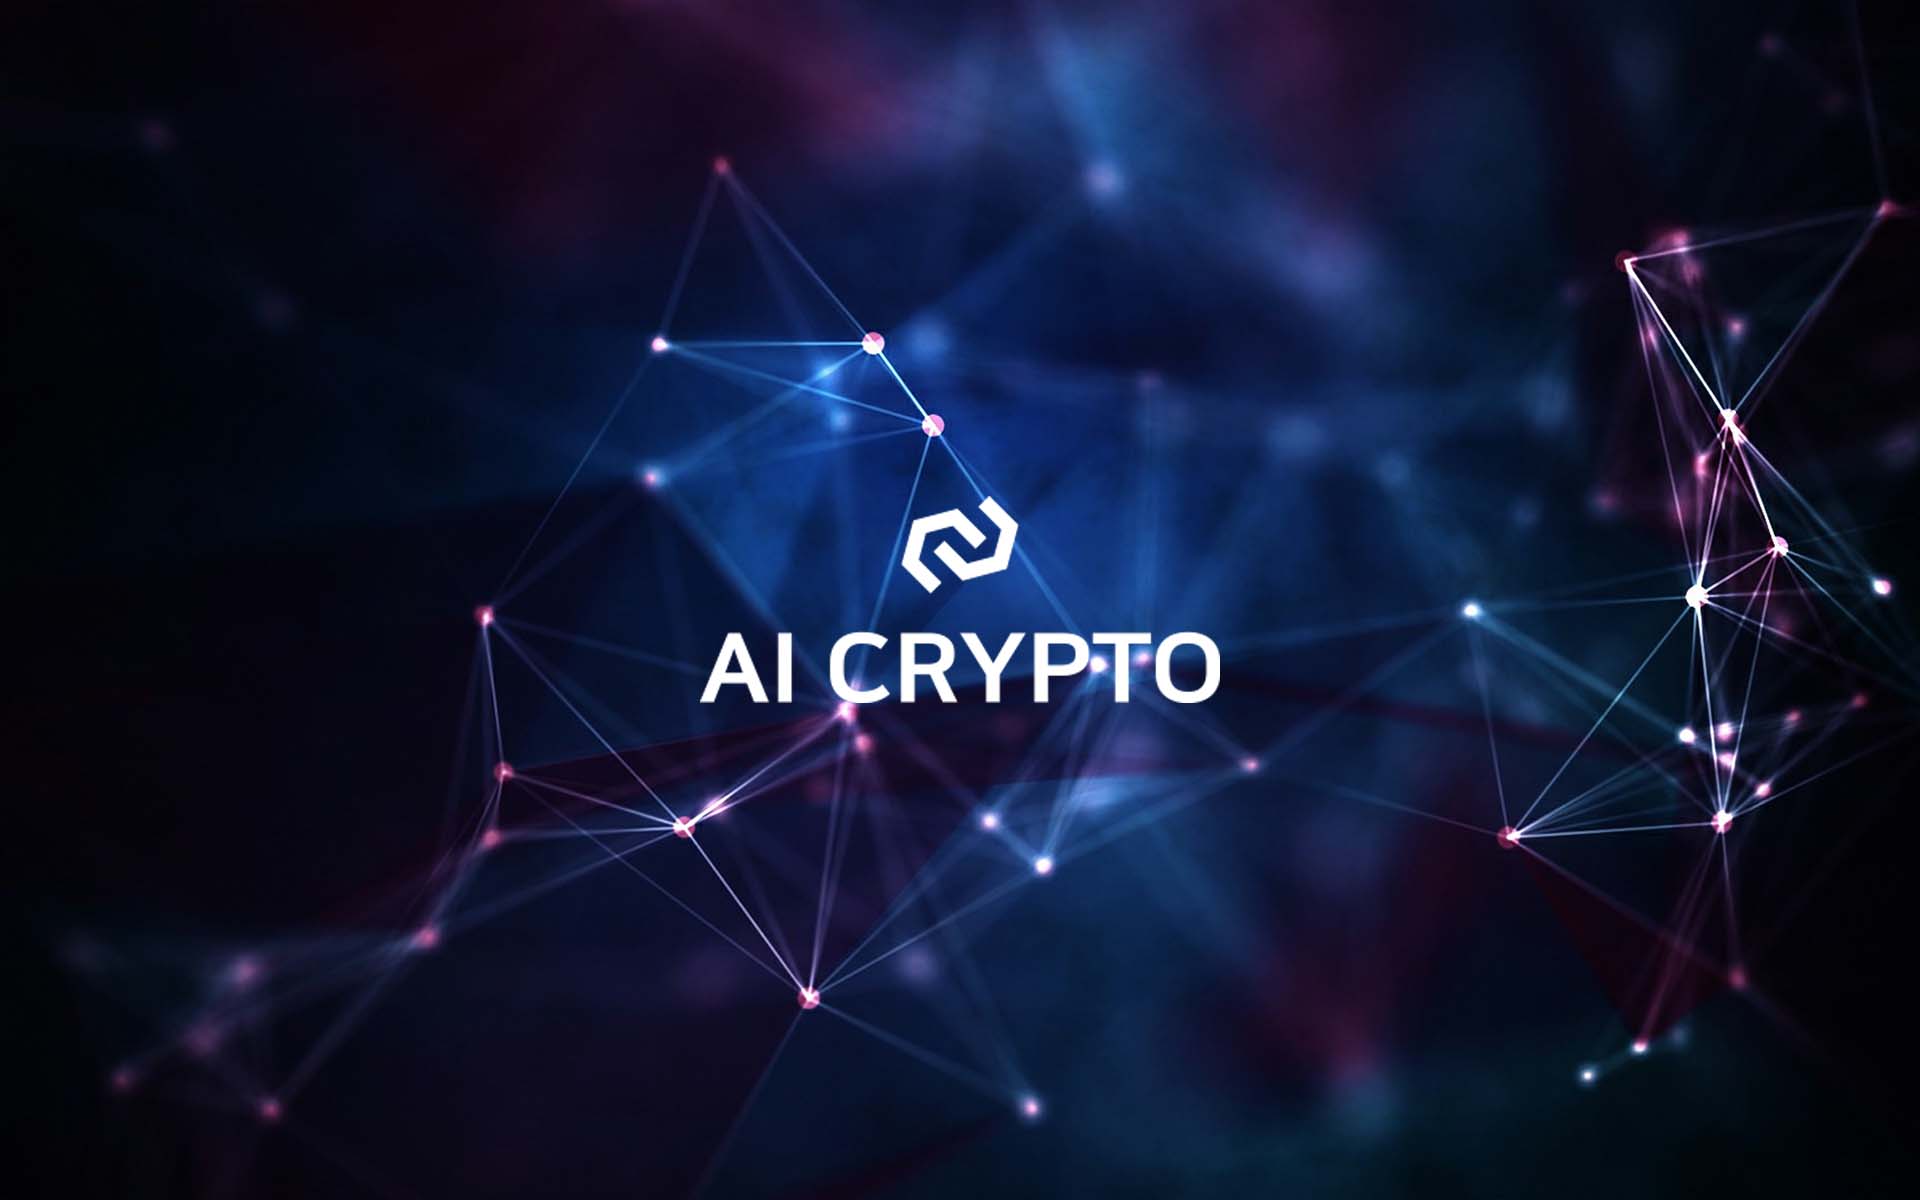 AI Crypto Opens AI Ecosystem Based on Blockchain